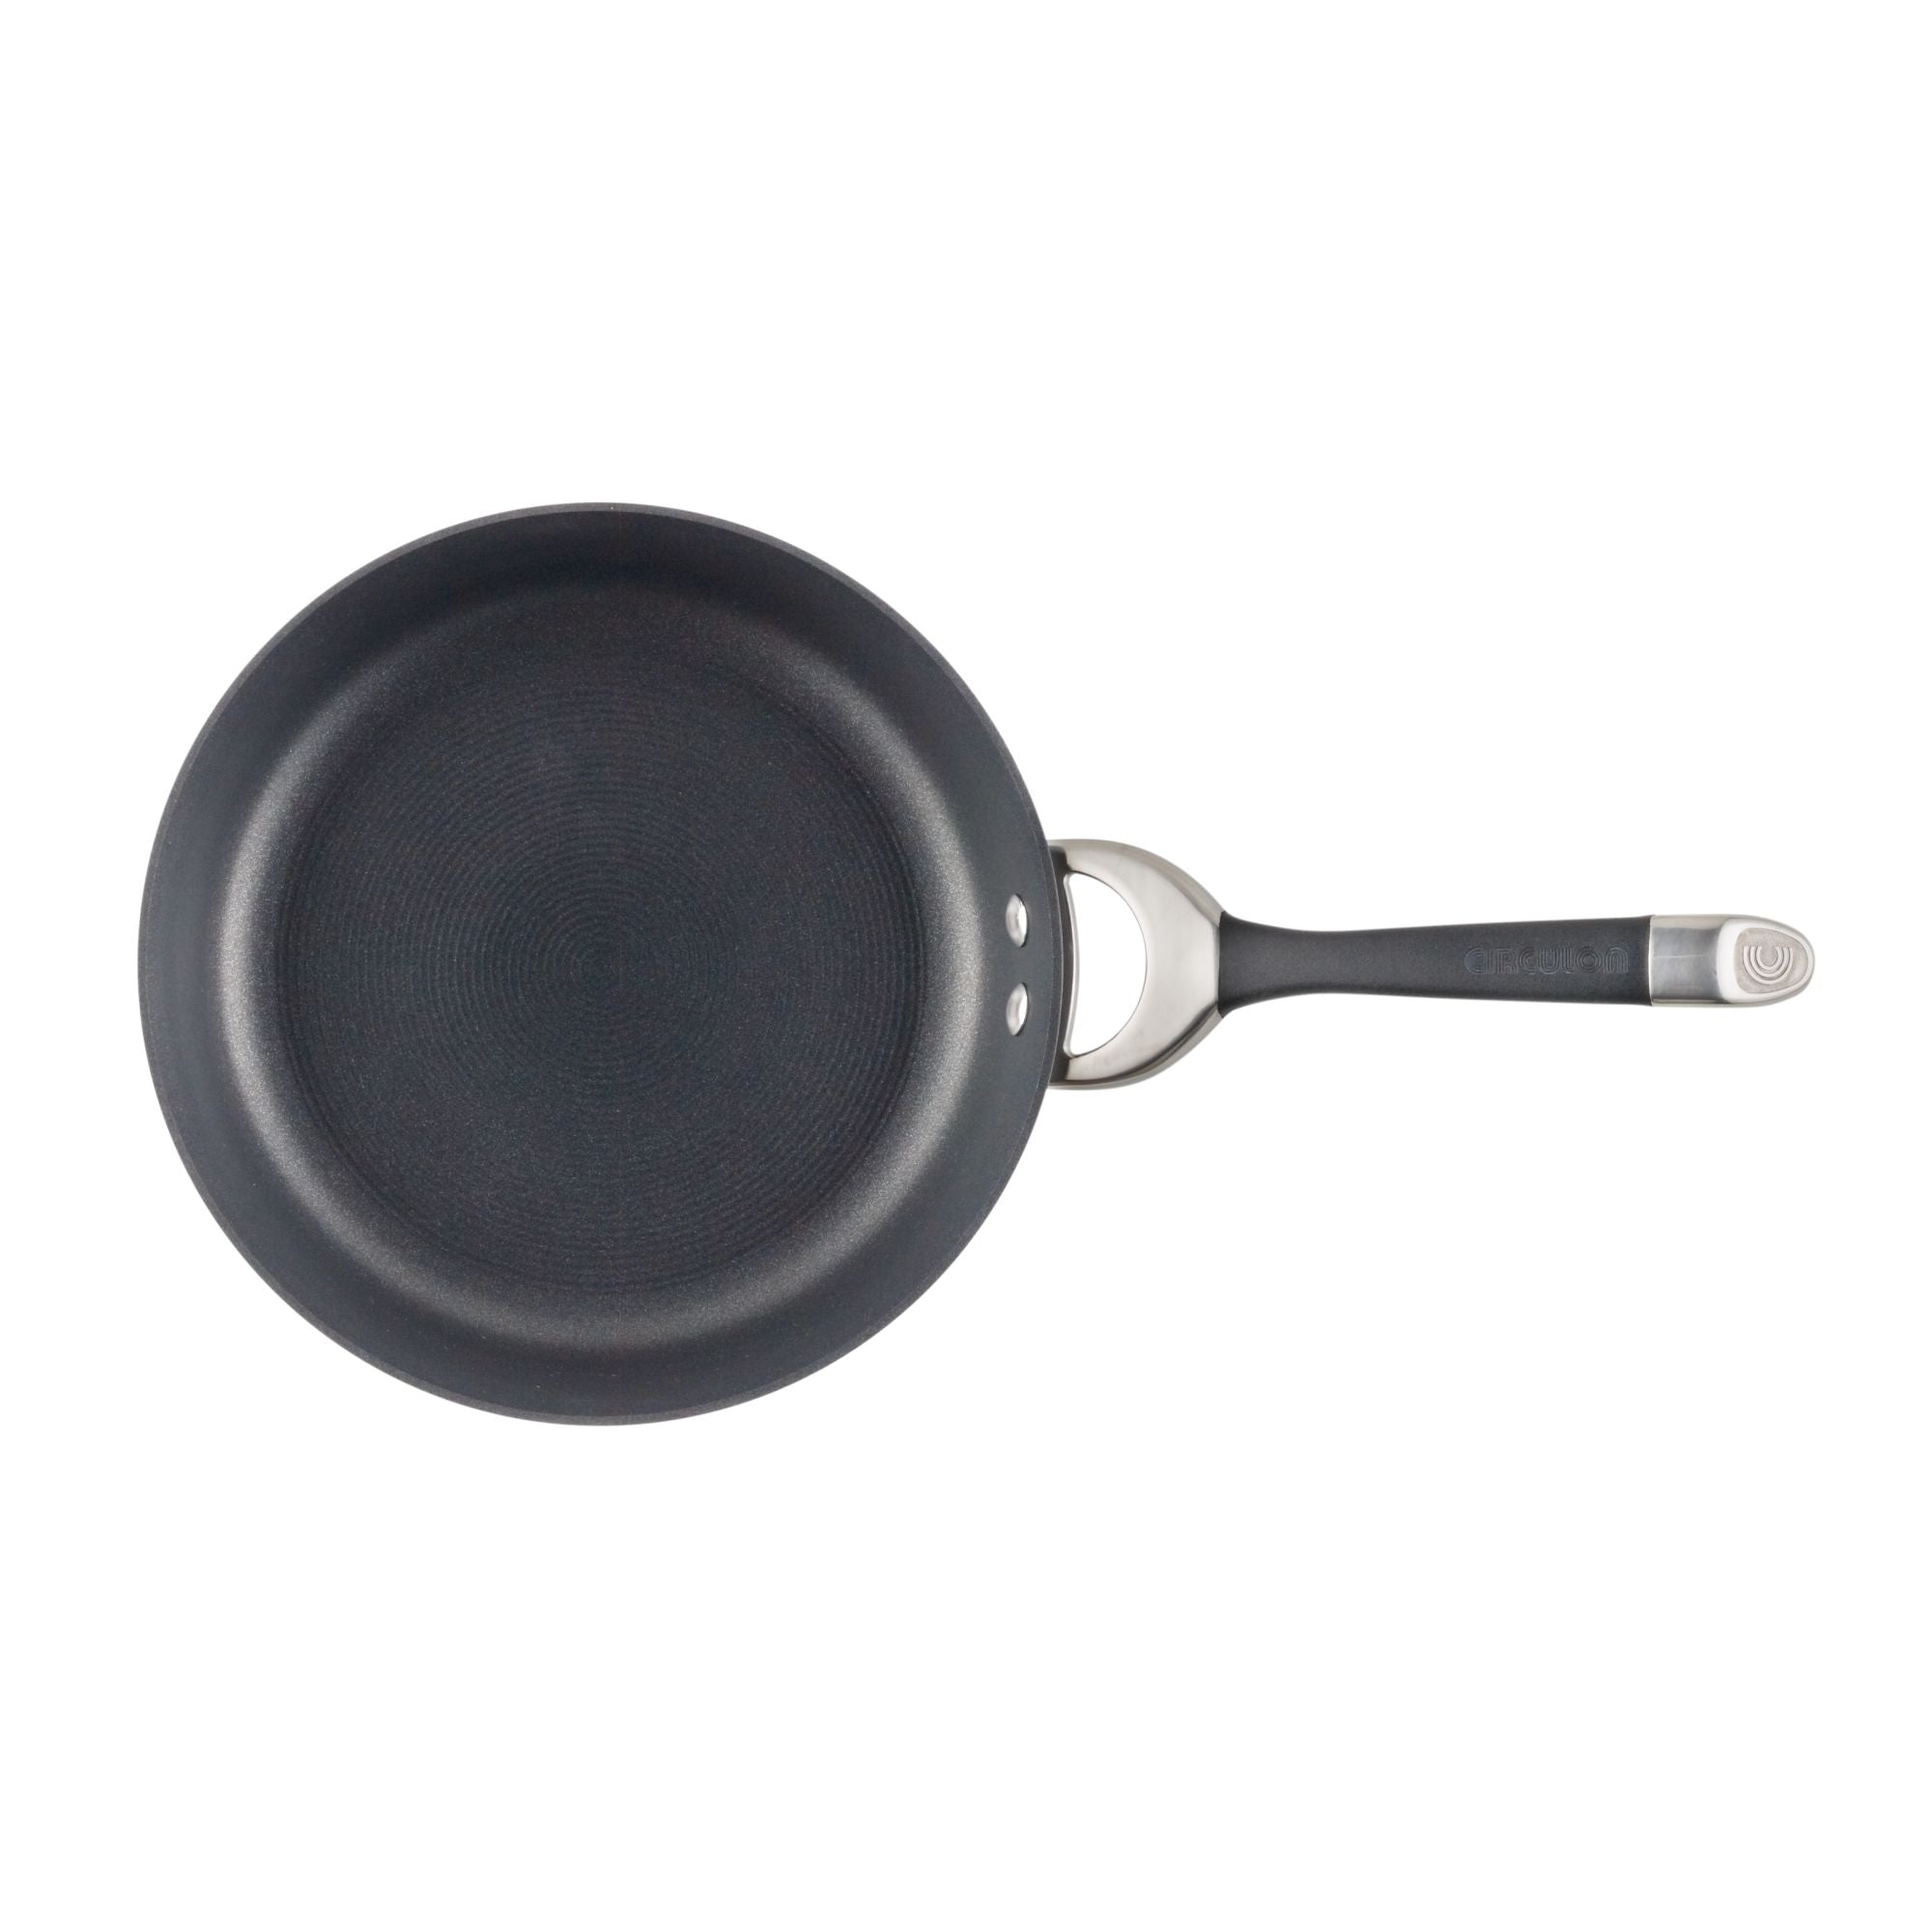  Circulon Symmetry Hard Anodized Nonstick Wok/Stir Fry Pan with  Lid, 12, Chocolate: Stir Fry Pans: Home & Kitchen